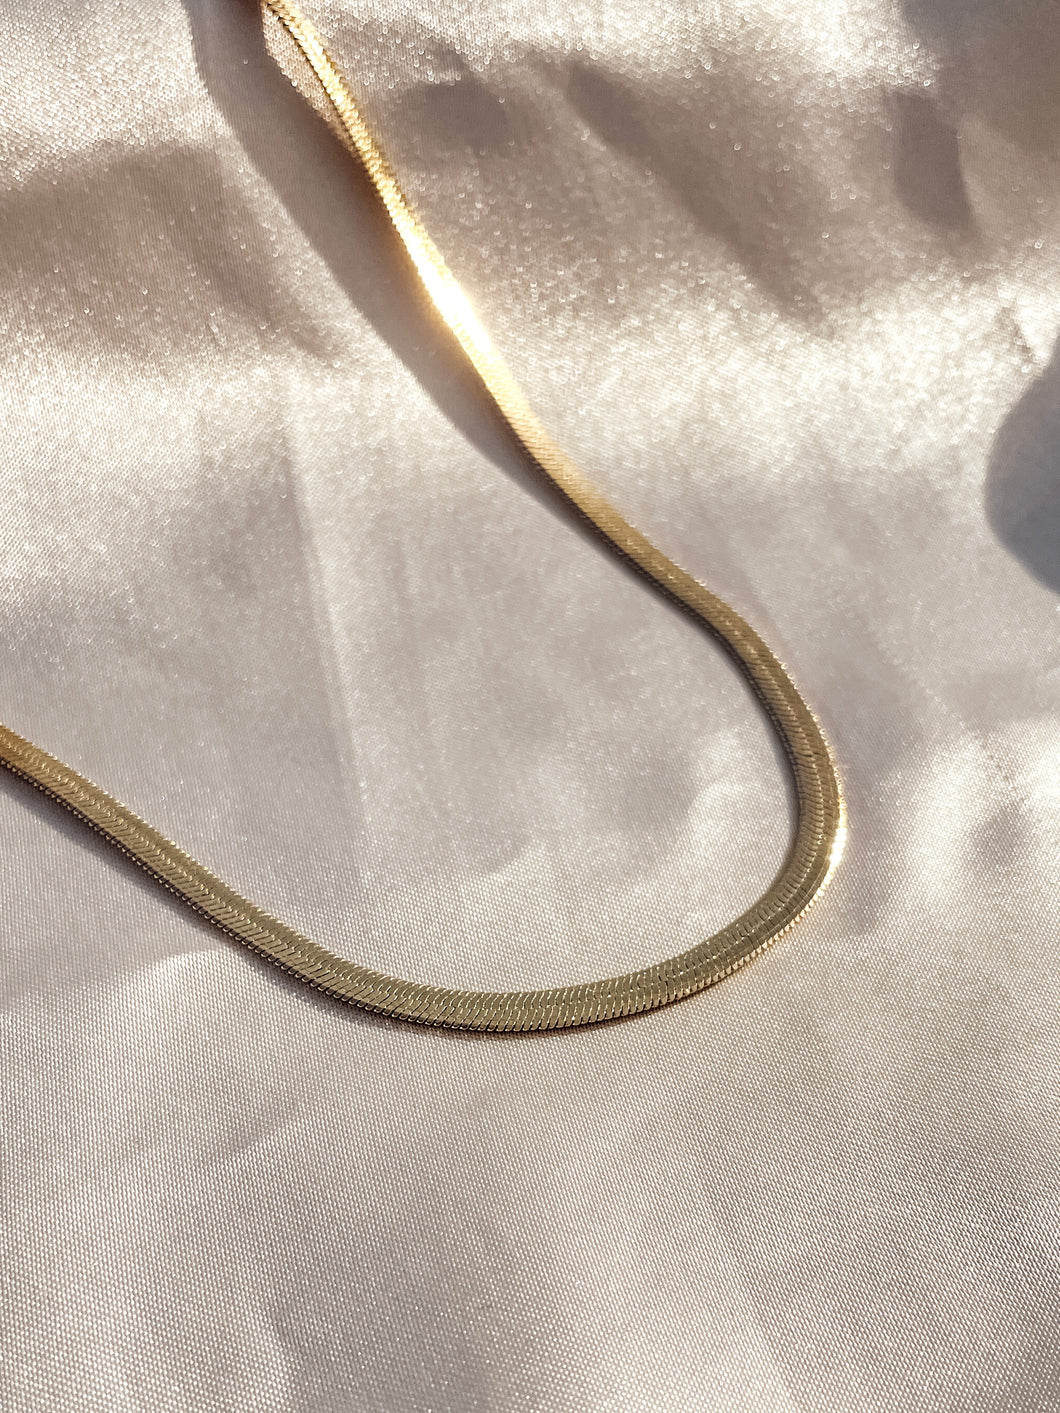 Basic Herringbone Chain Necklace